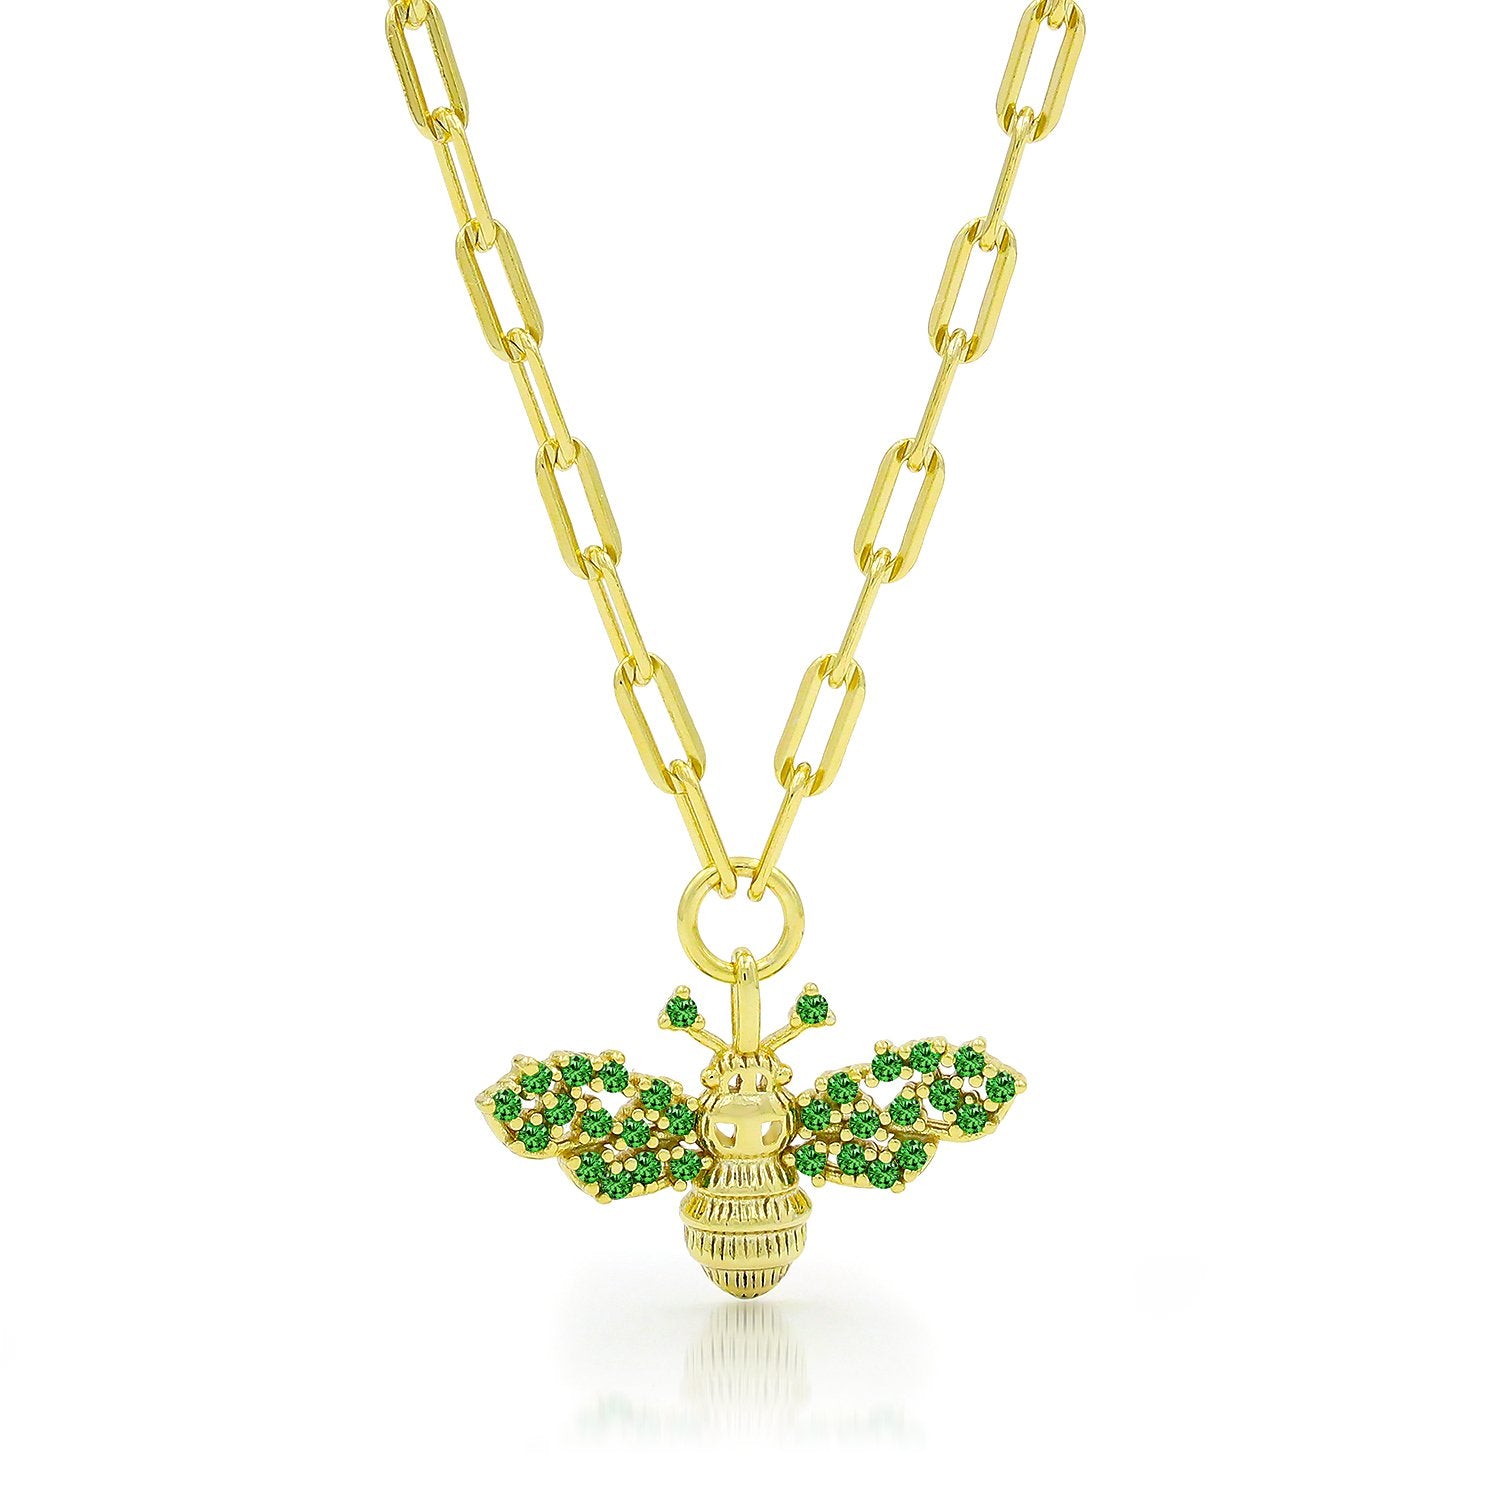 Swarovski Crystal 'Lisabel' Bumblebee Necklace #5394212 | eBay